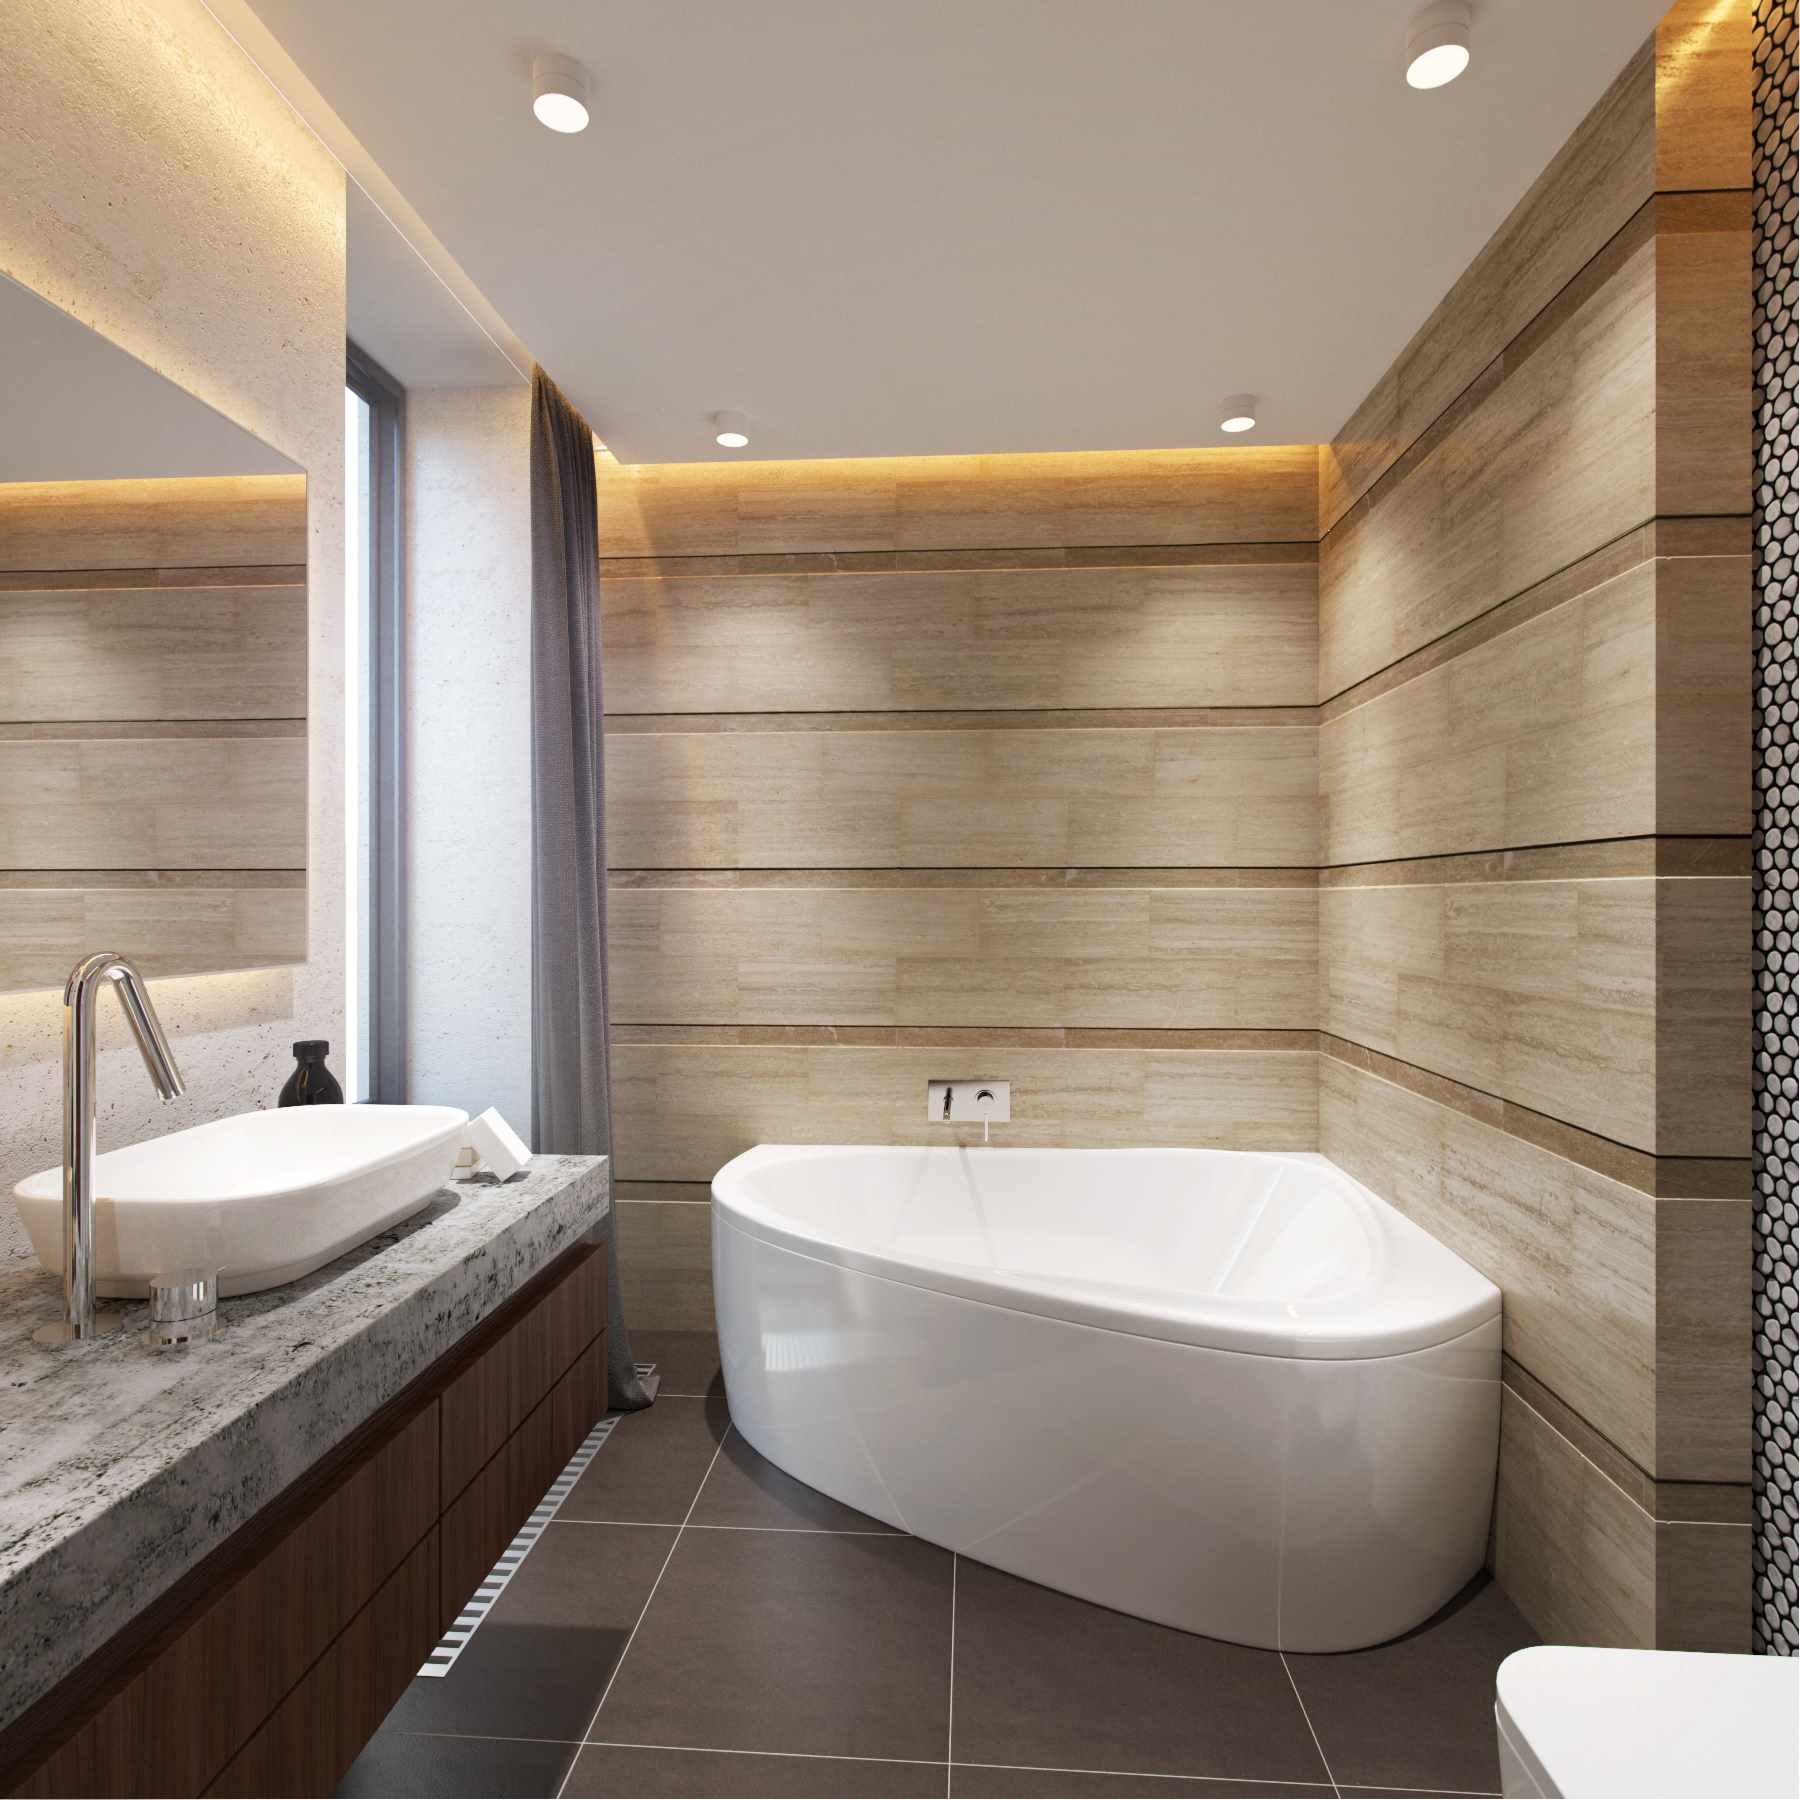 An example of a light bathroom design with a corner bath